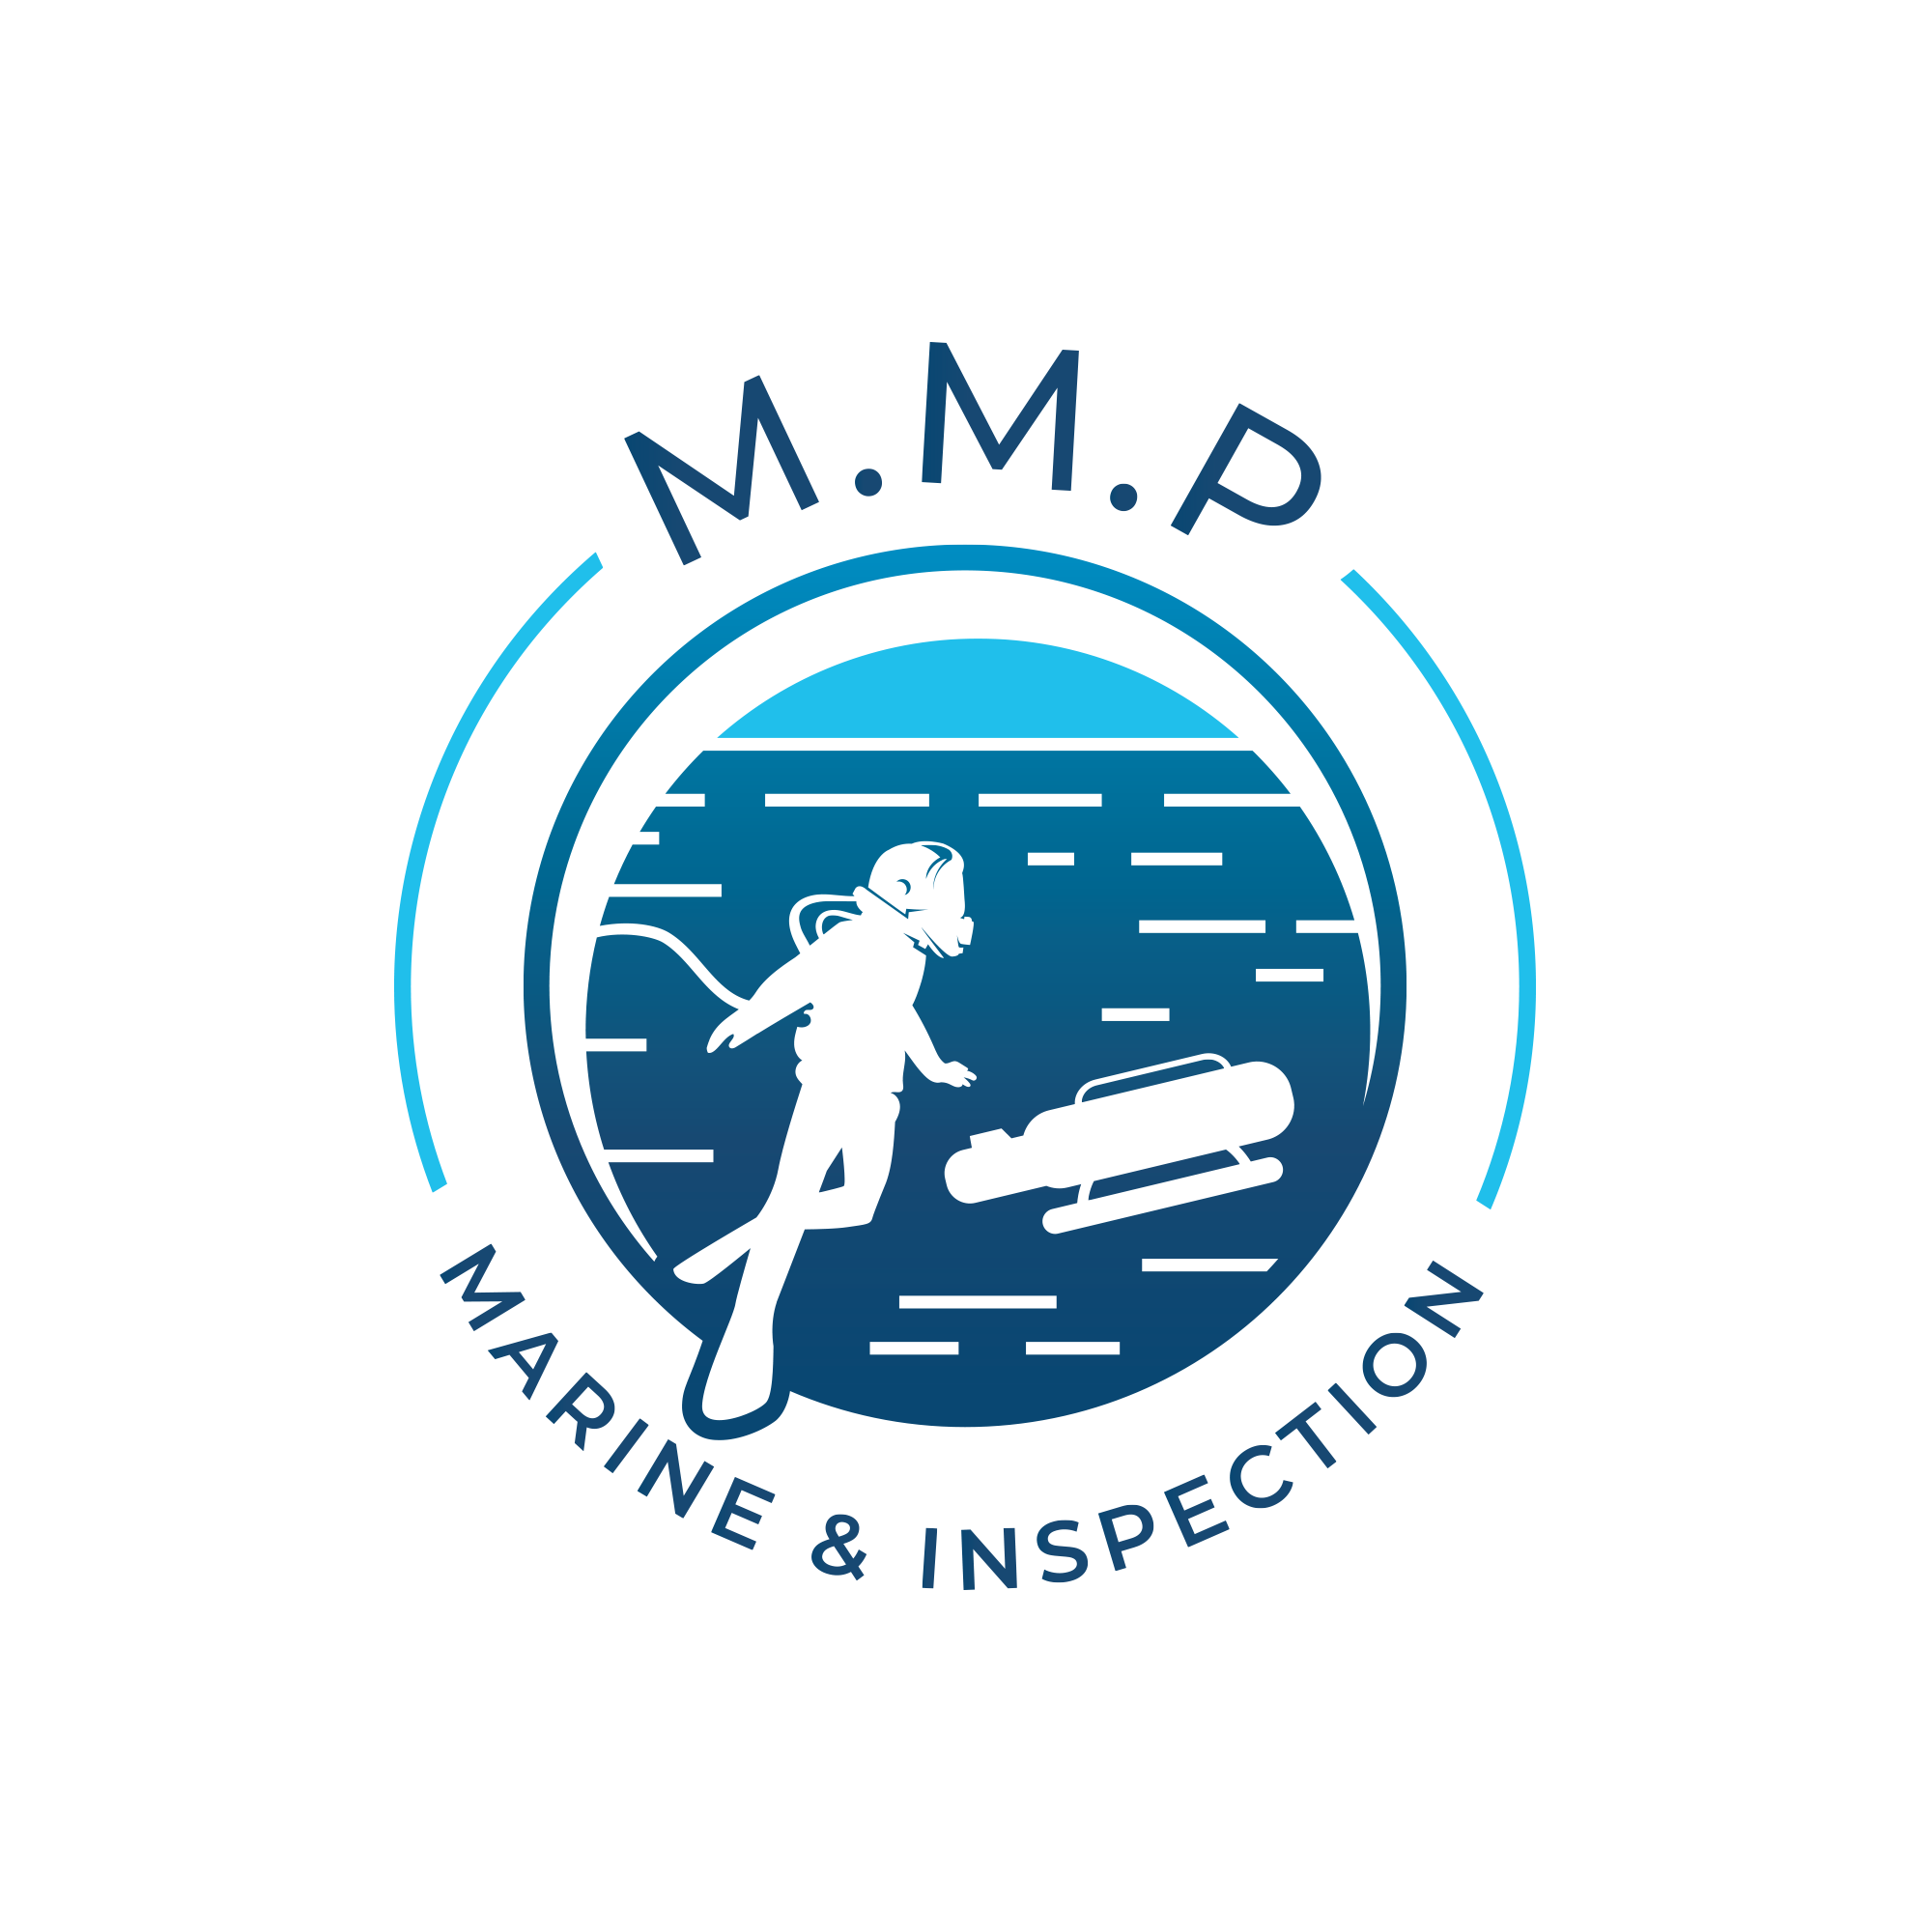 MMP Marine &amp; Inspection Ltd